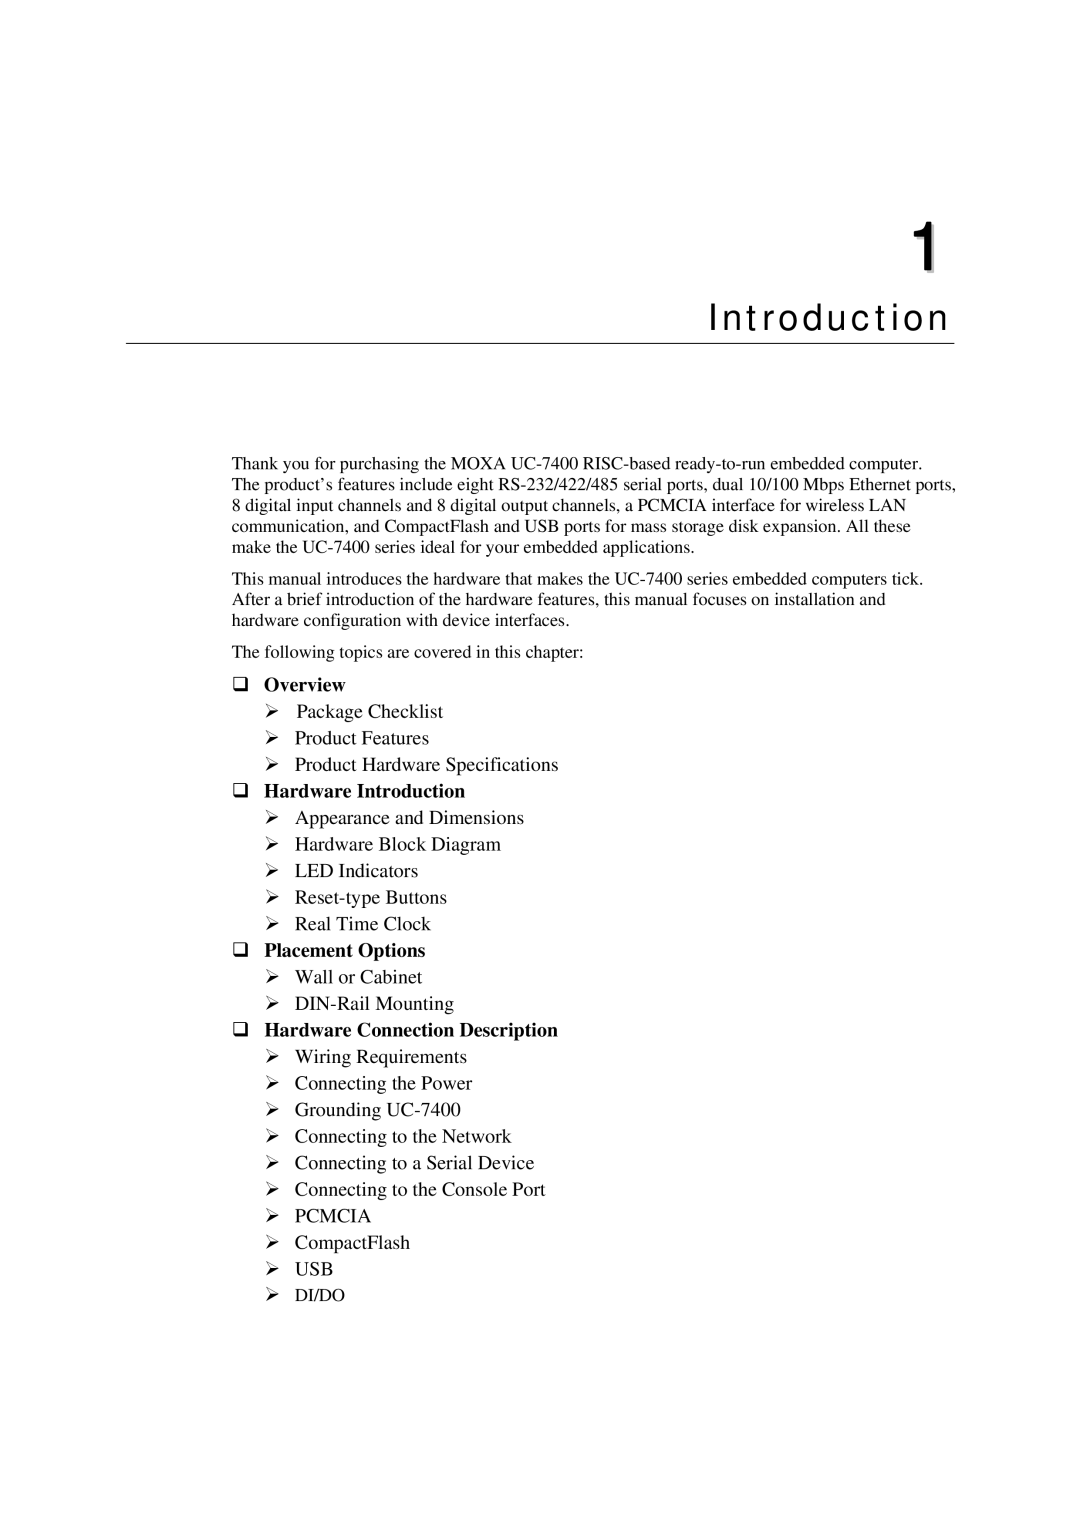 Moxa Technologies UC-7400 user manual Introduction 